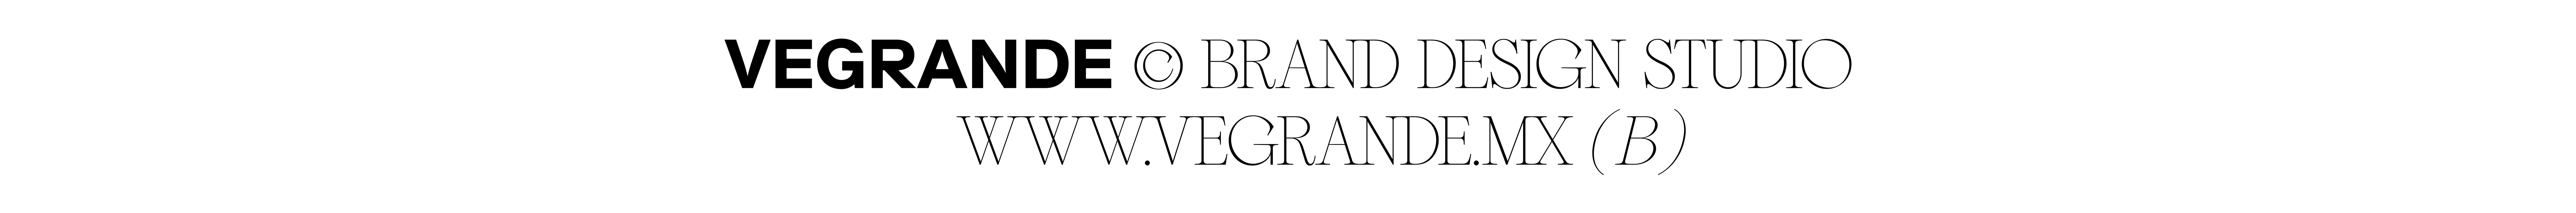 VEGRANDE ®'s profile banner